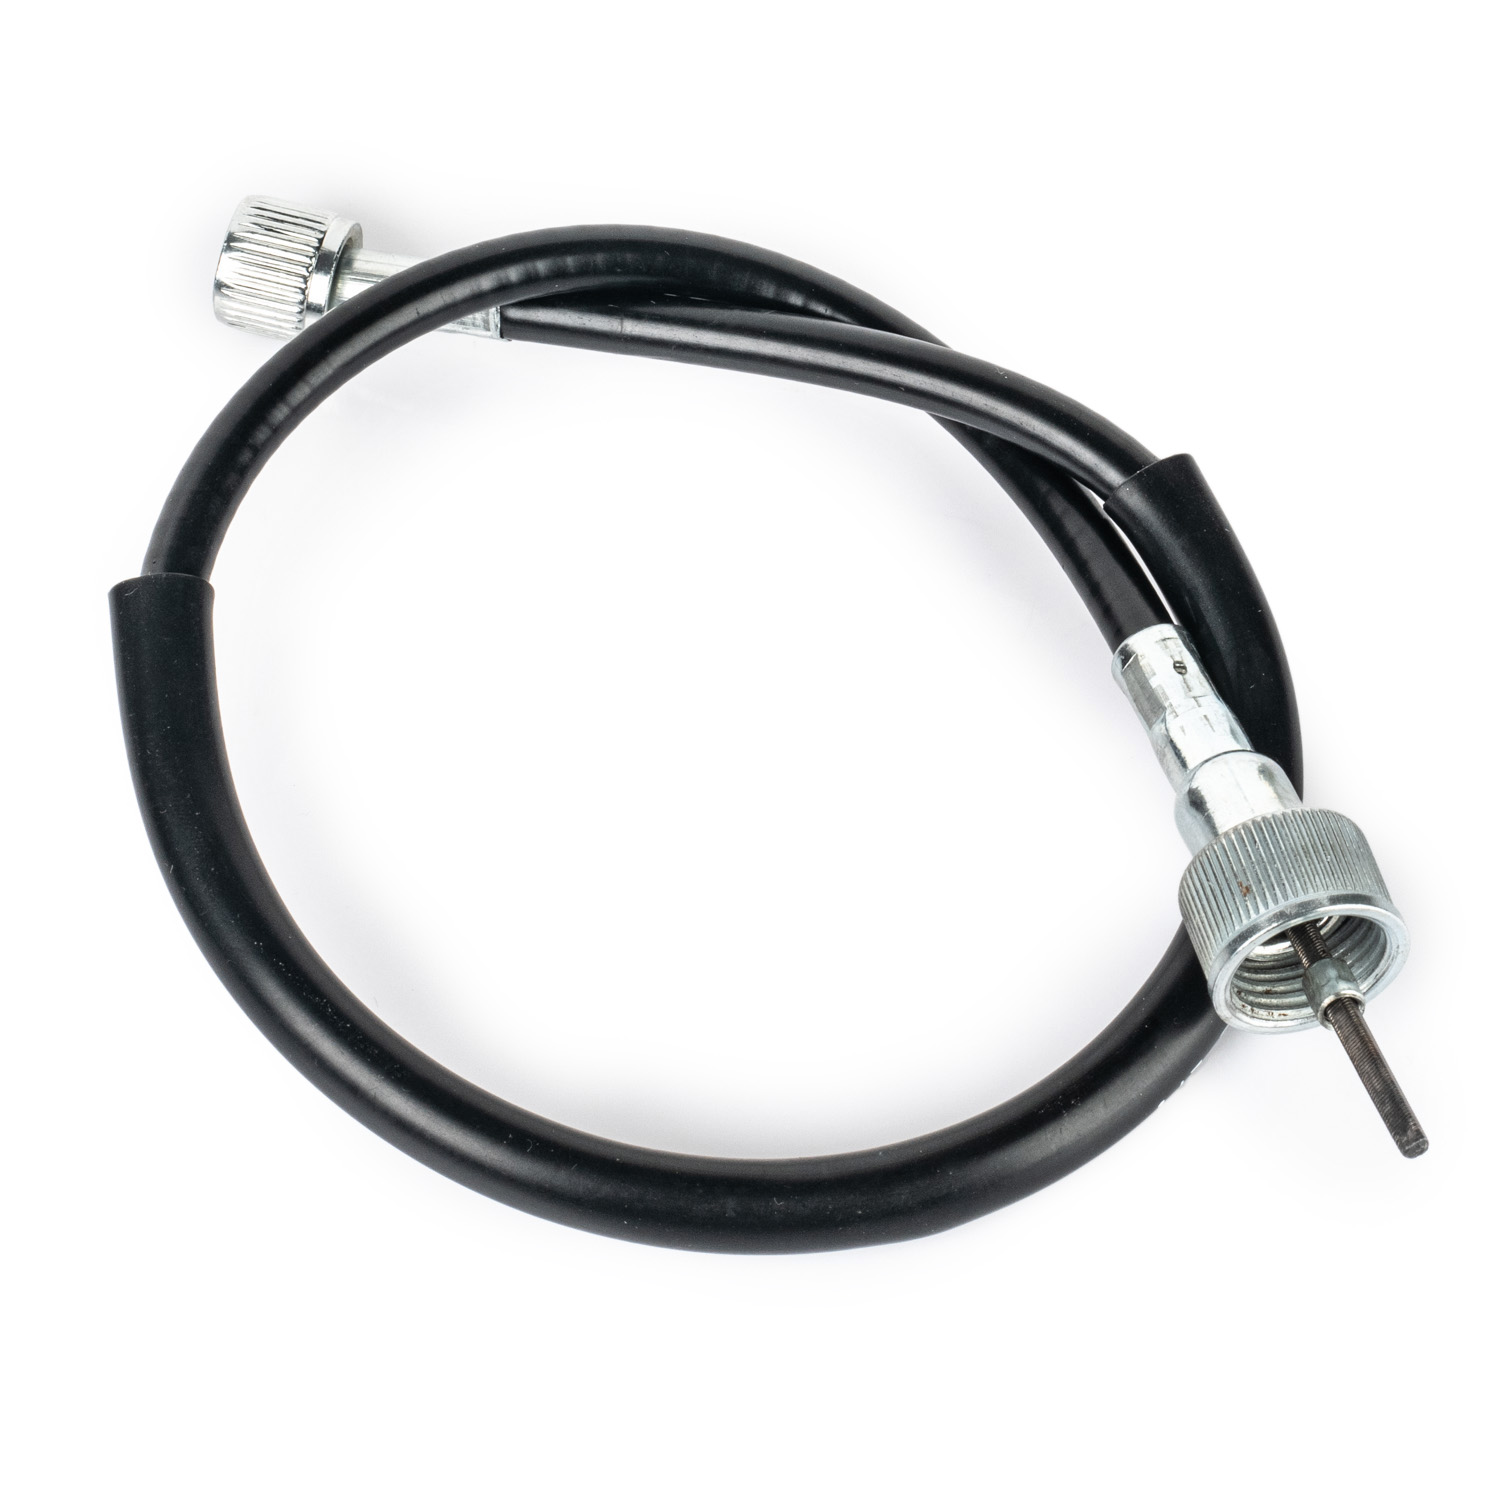 XS750 Tacho Revcounter Cable